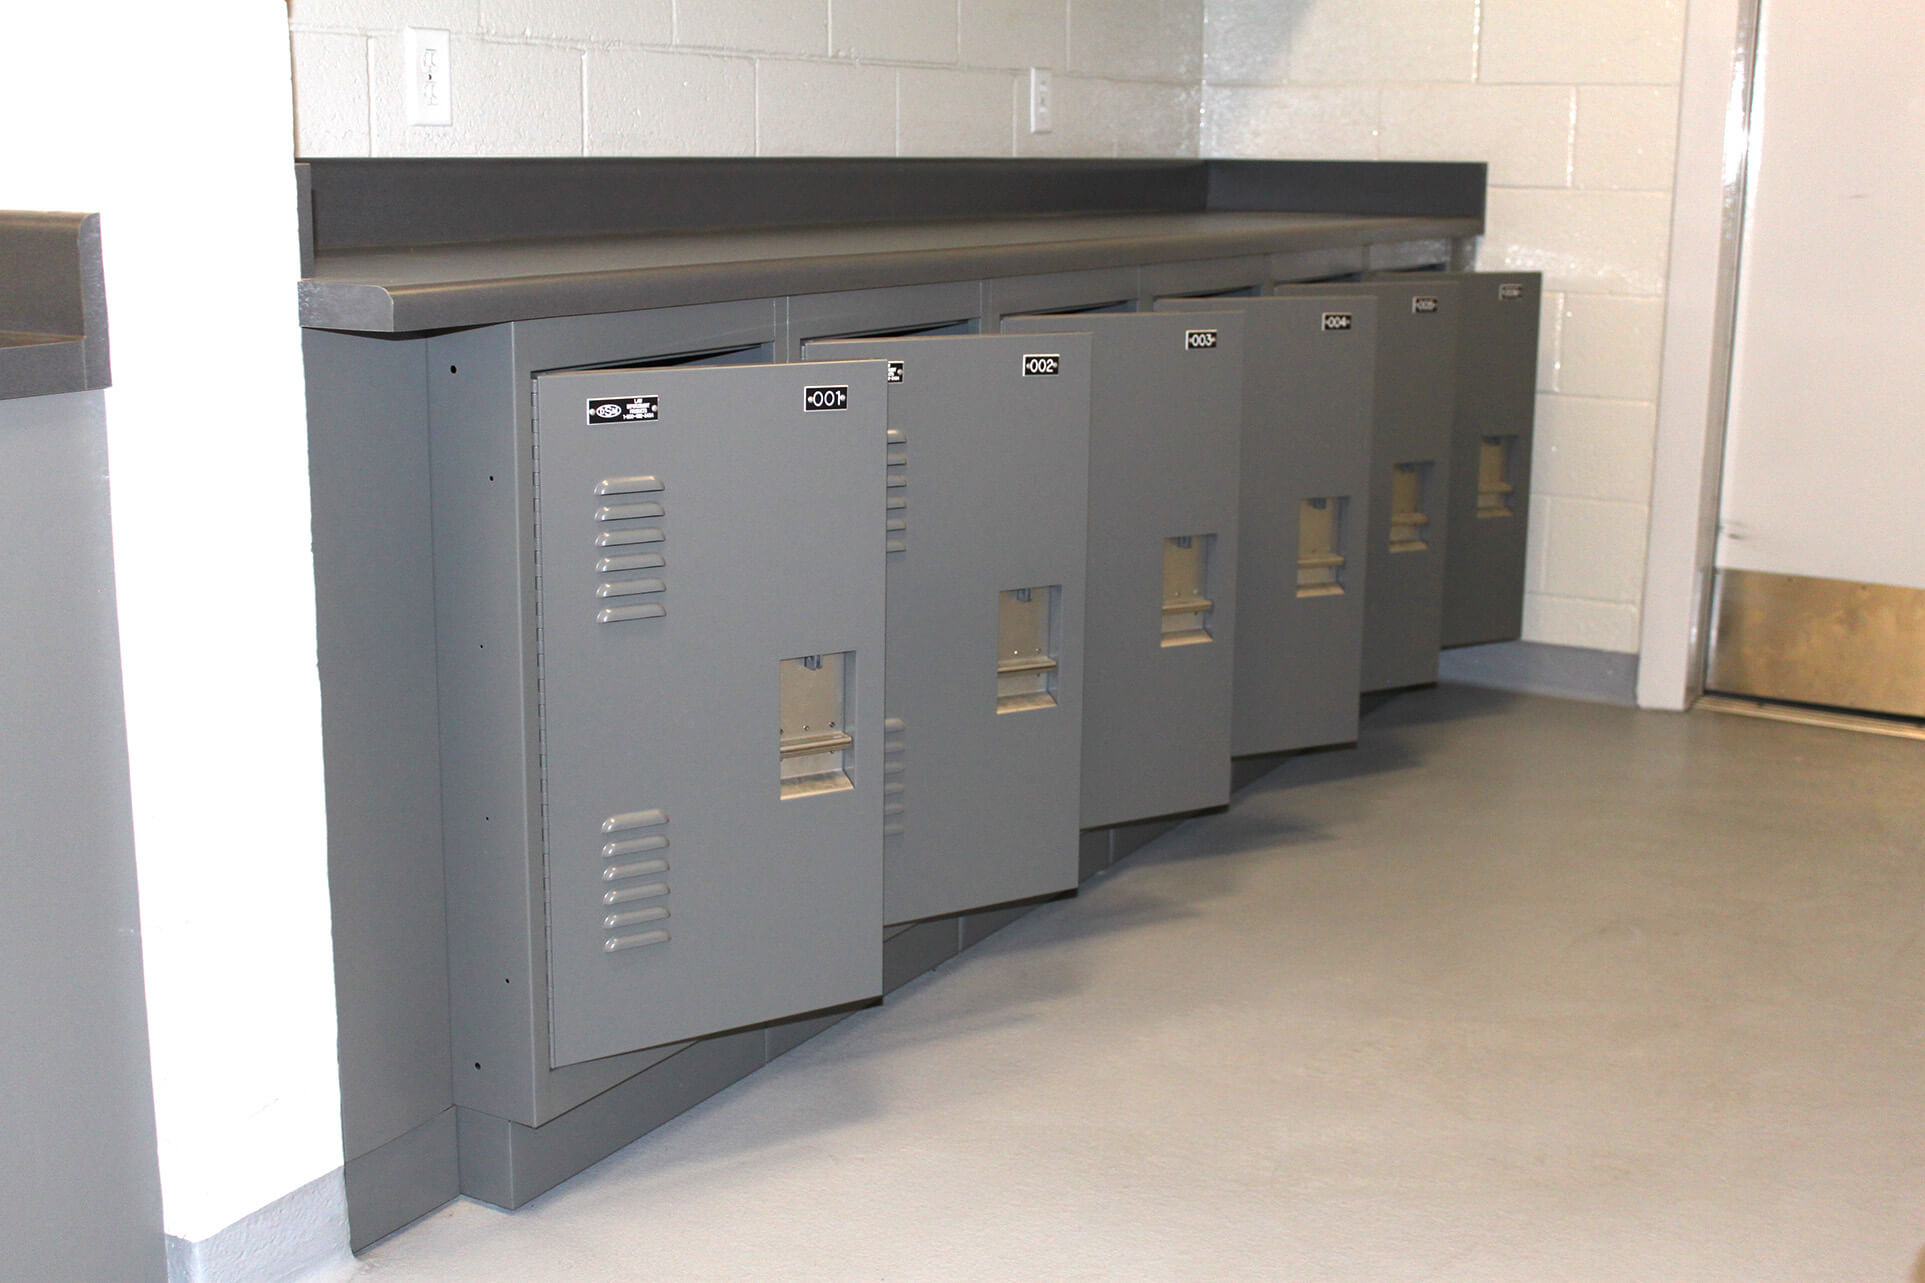 Personal storage lockers for prisoner property